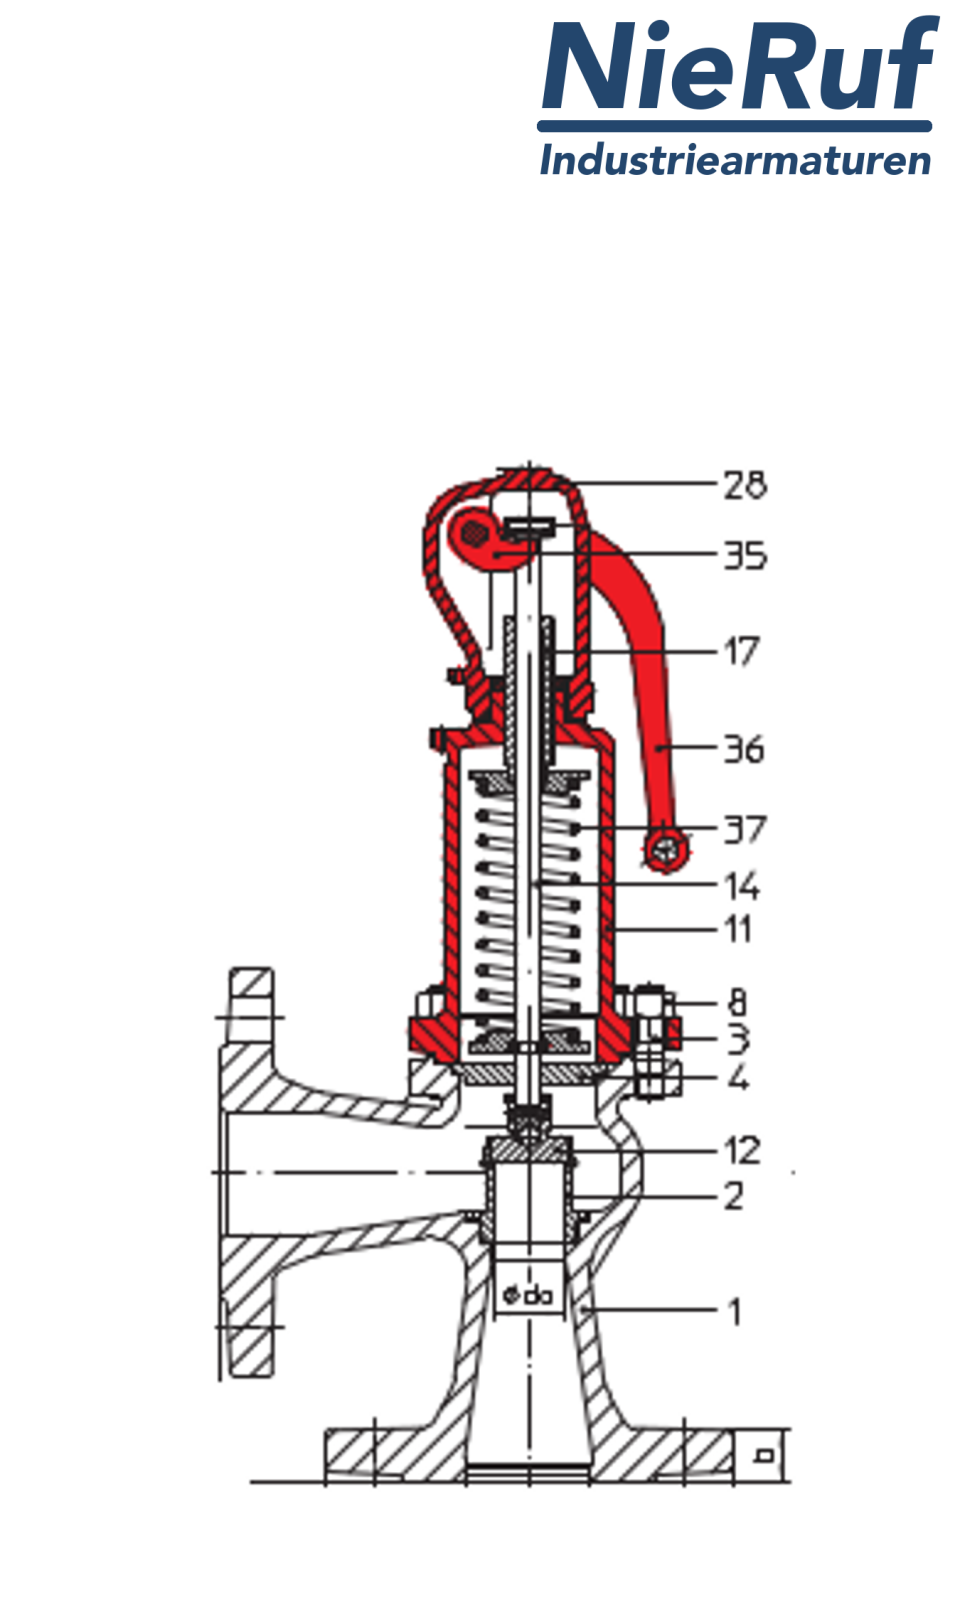 flange-safety valve DN32/DN32 SF02, cast steel 1.0619+N FPM, with lever